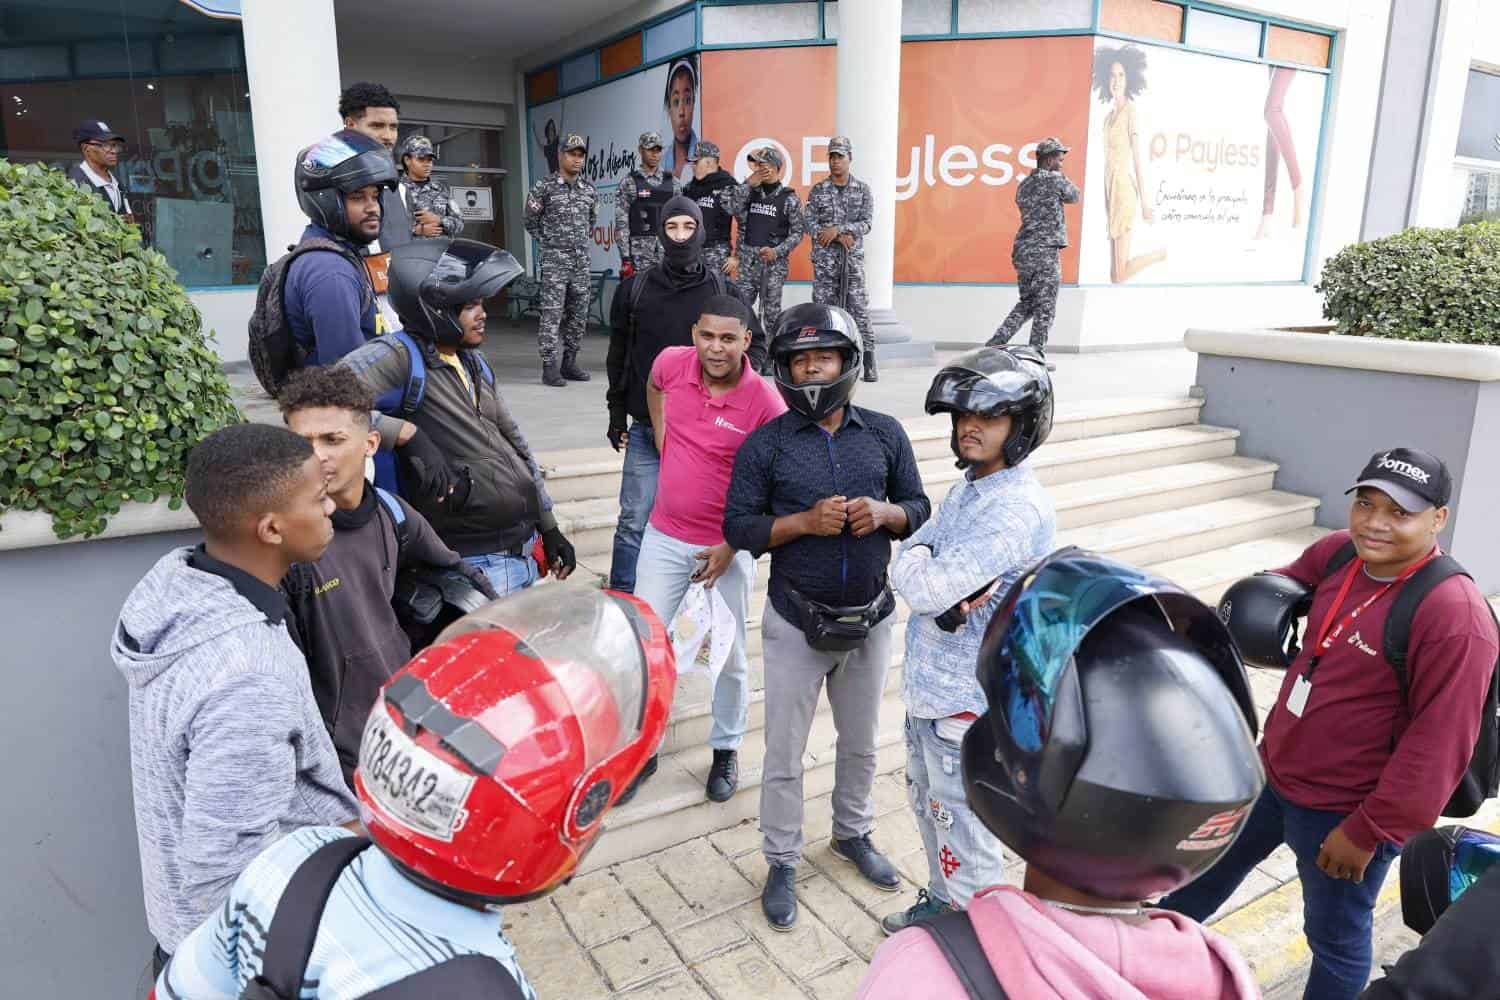 Un grupo de moto Uber a las afueras de Diamond Mall, mientras son custodiados por agentes policiales.